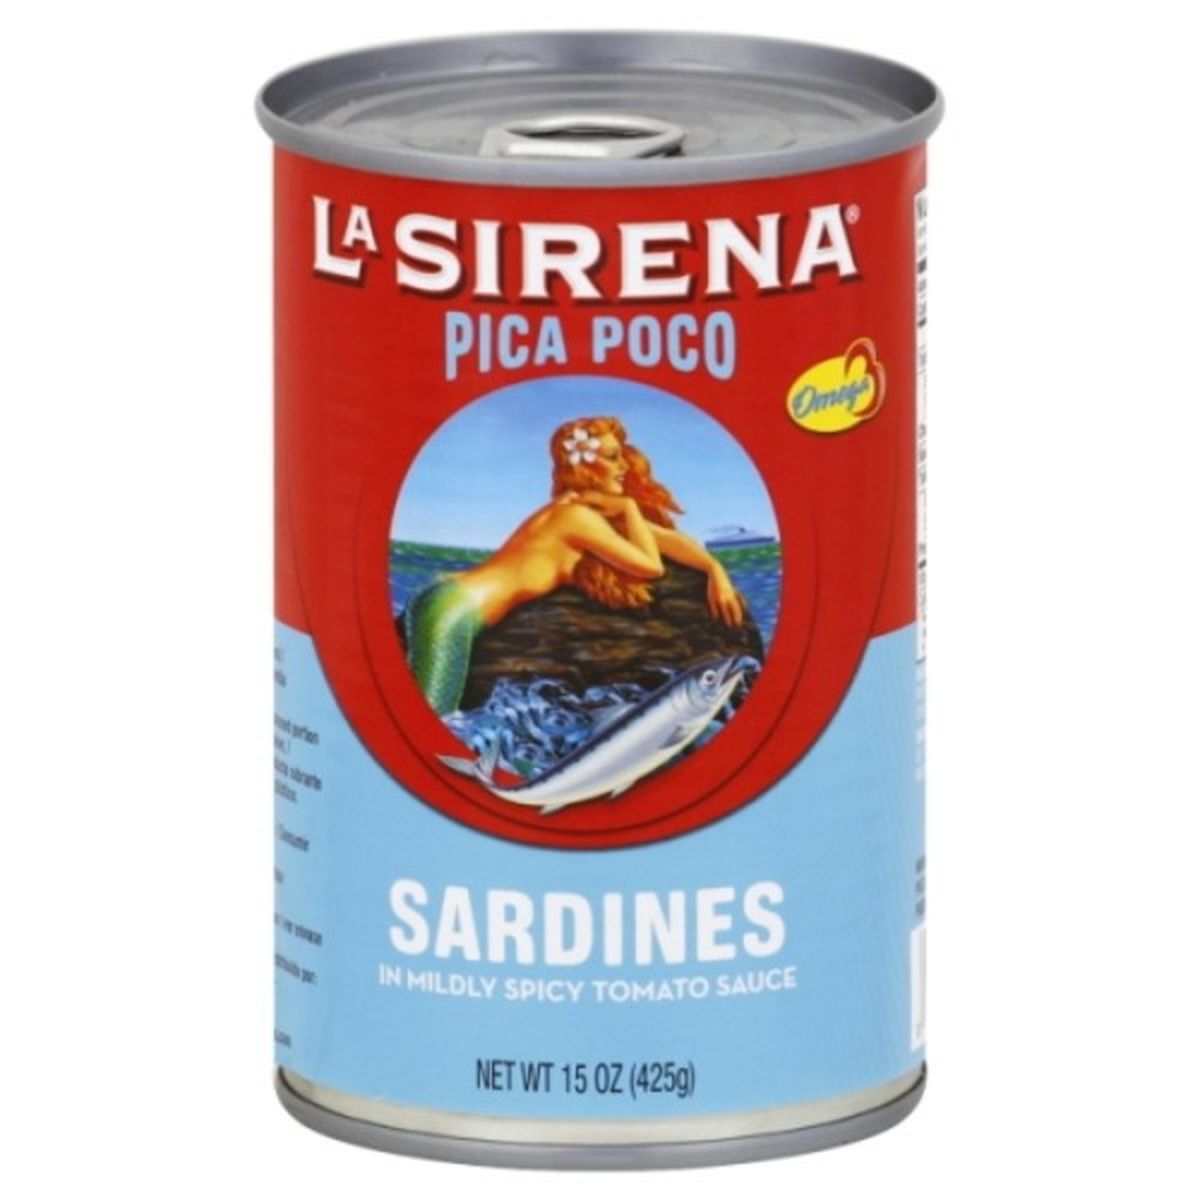 Calories in La Sirena Sardines, Pica Poco